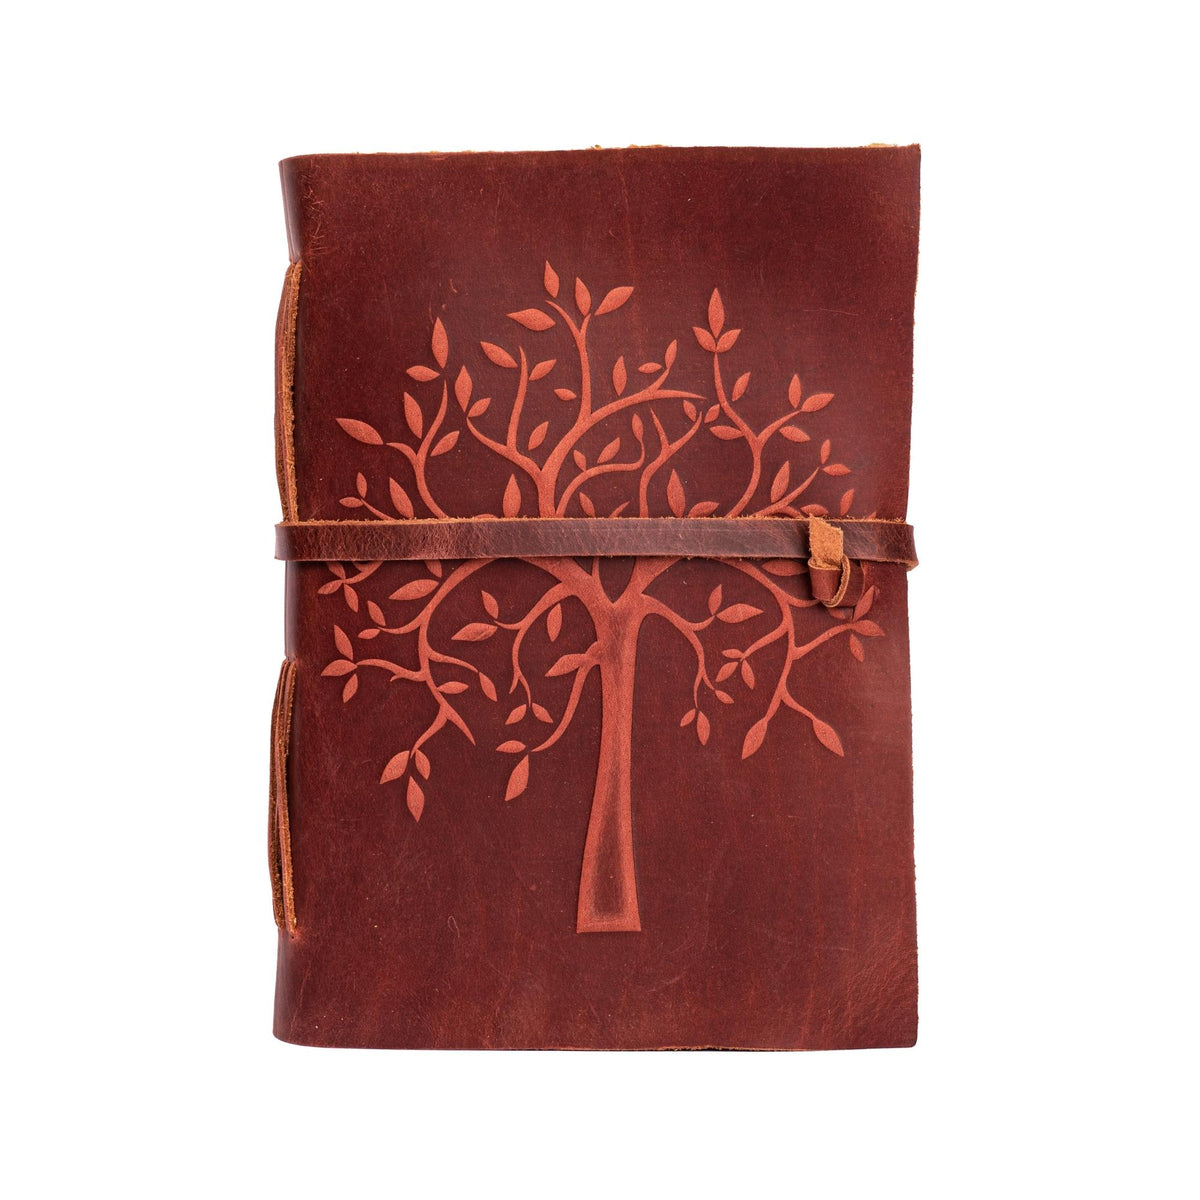 Leather Village - Tree of Life Journal - Handmade Vintage Paper